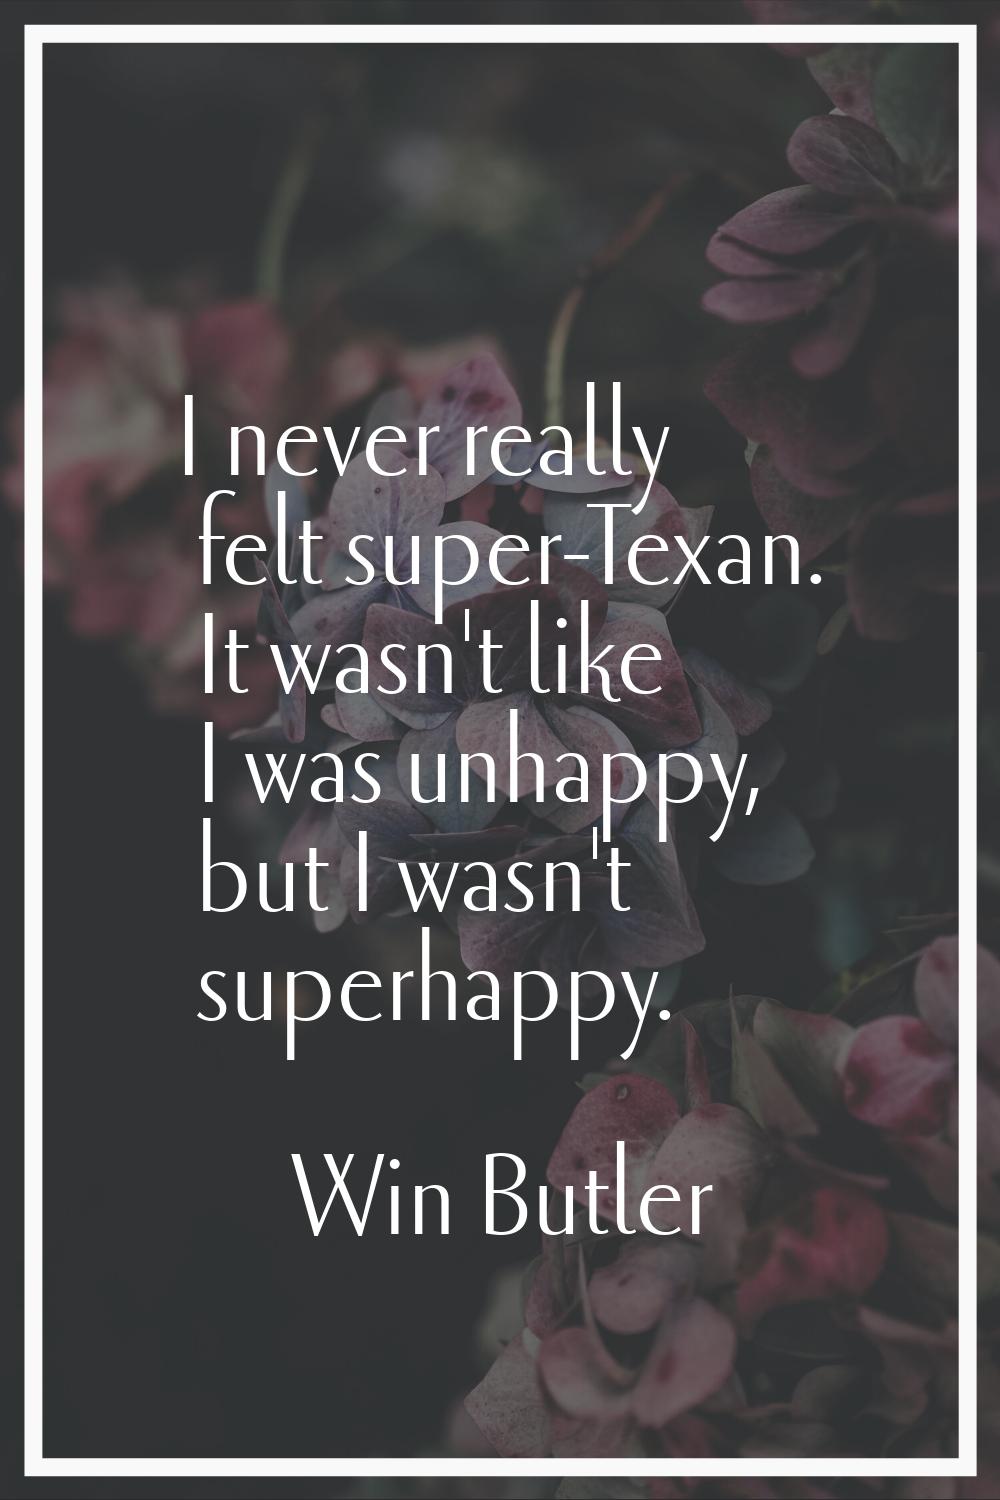 I never really felt super-Texan. It wasn't like I was unhappy, but I wasn't superhappy.